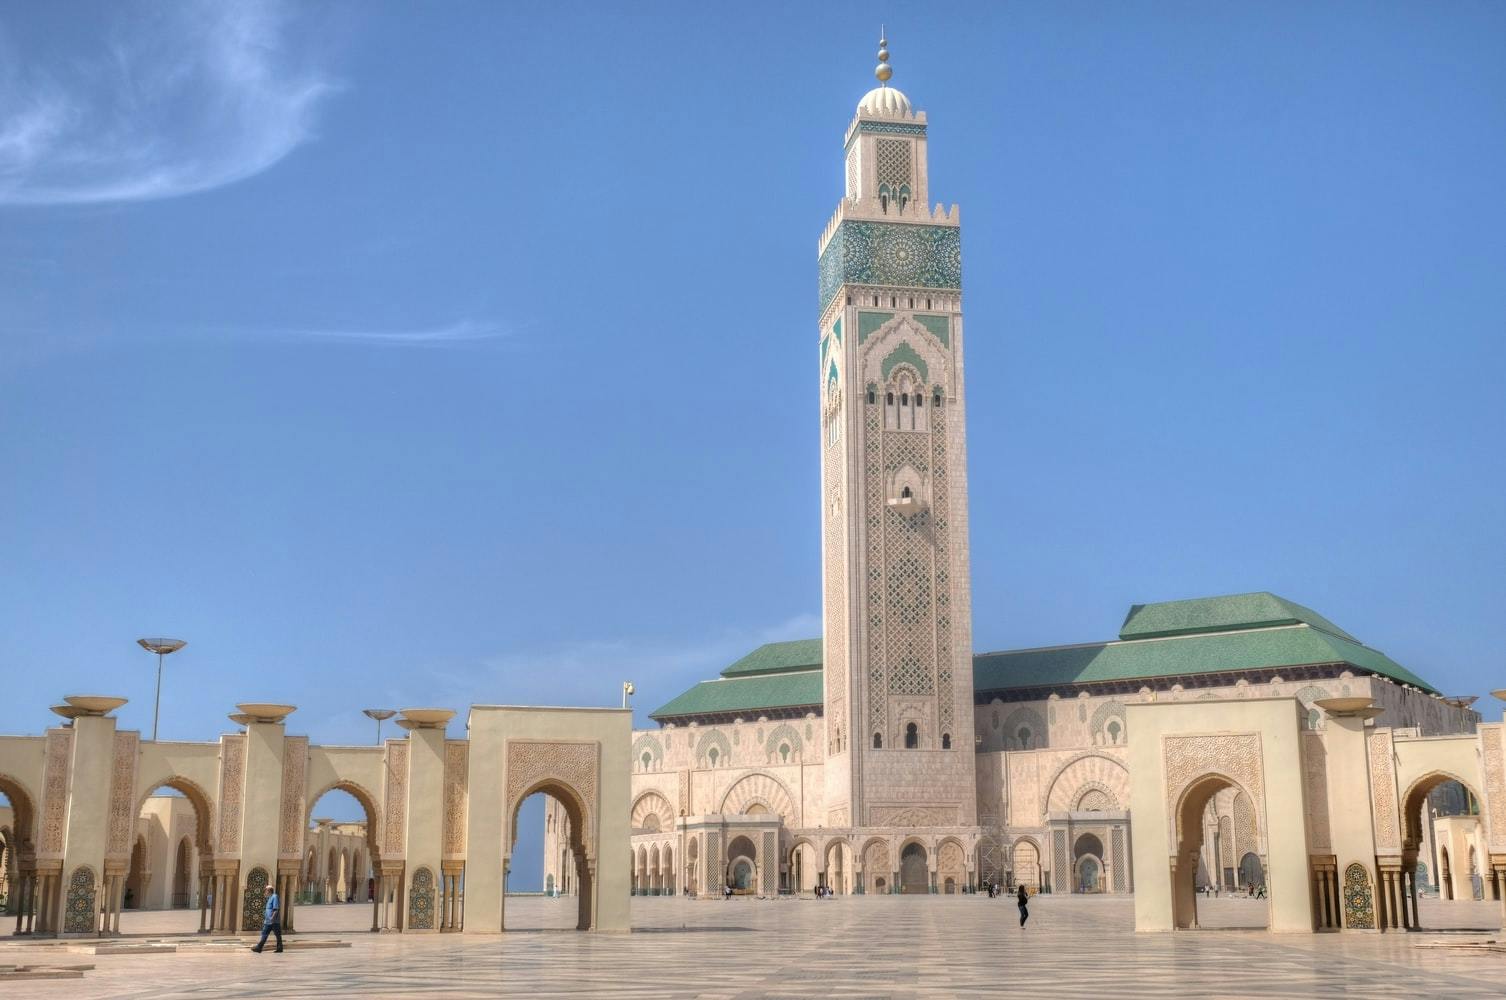 8-daagse privétour van Casablanca naar Marrakech via de Sahara-woestijn